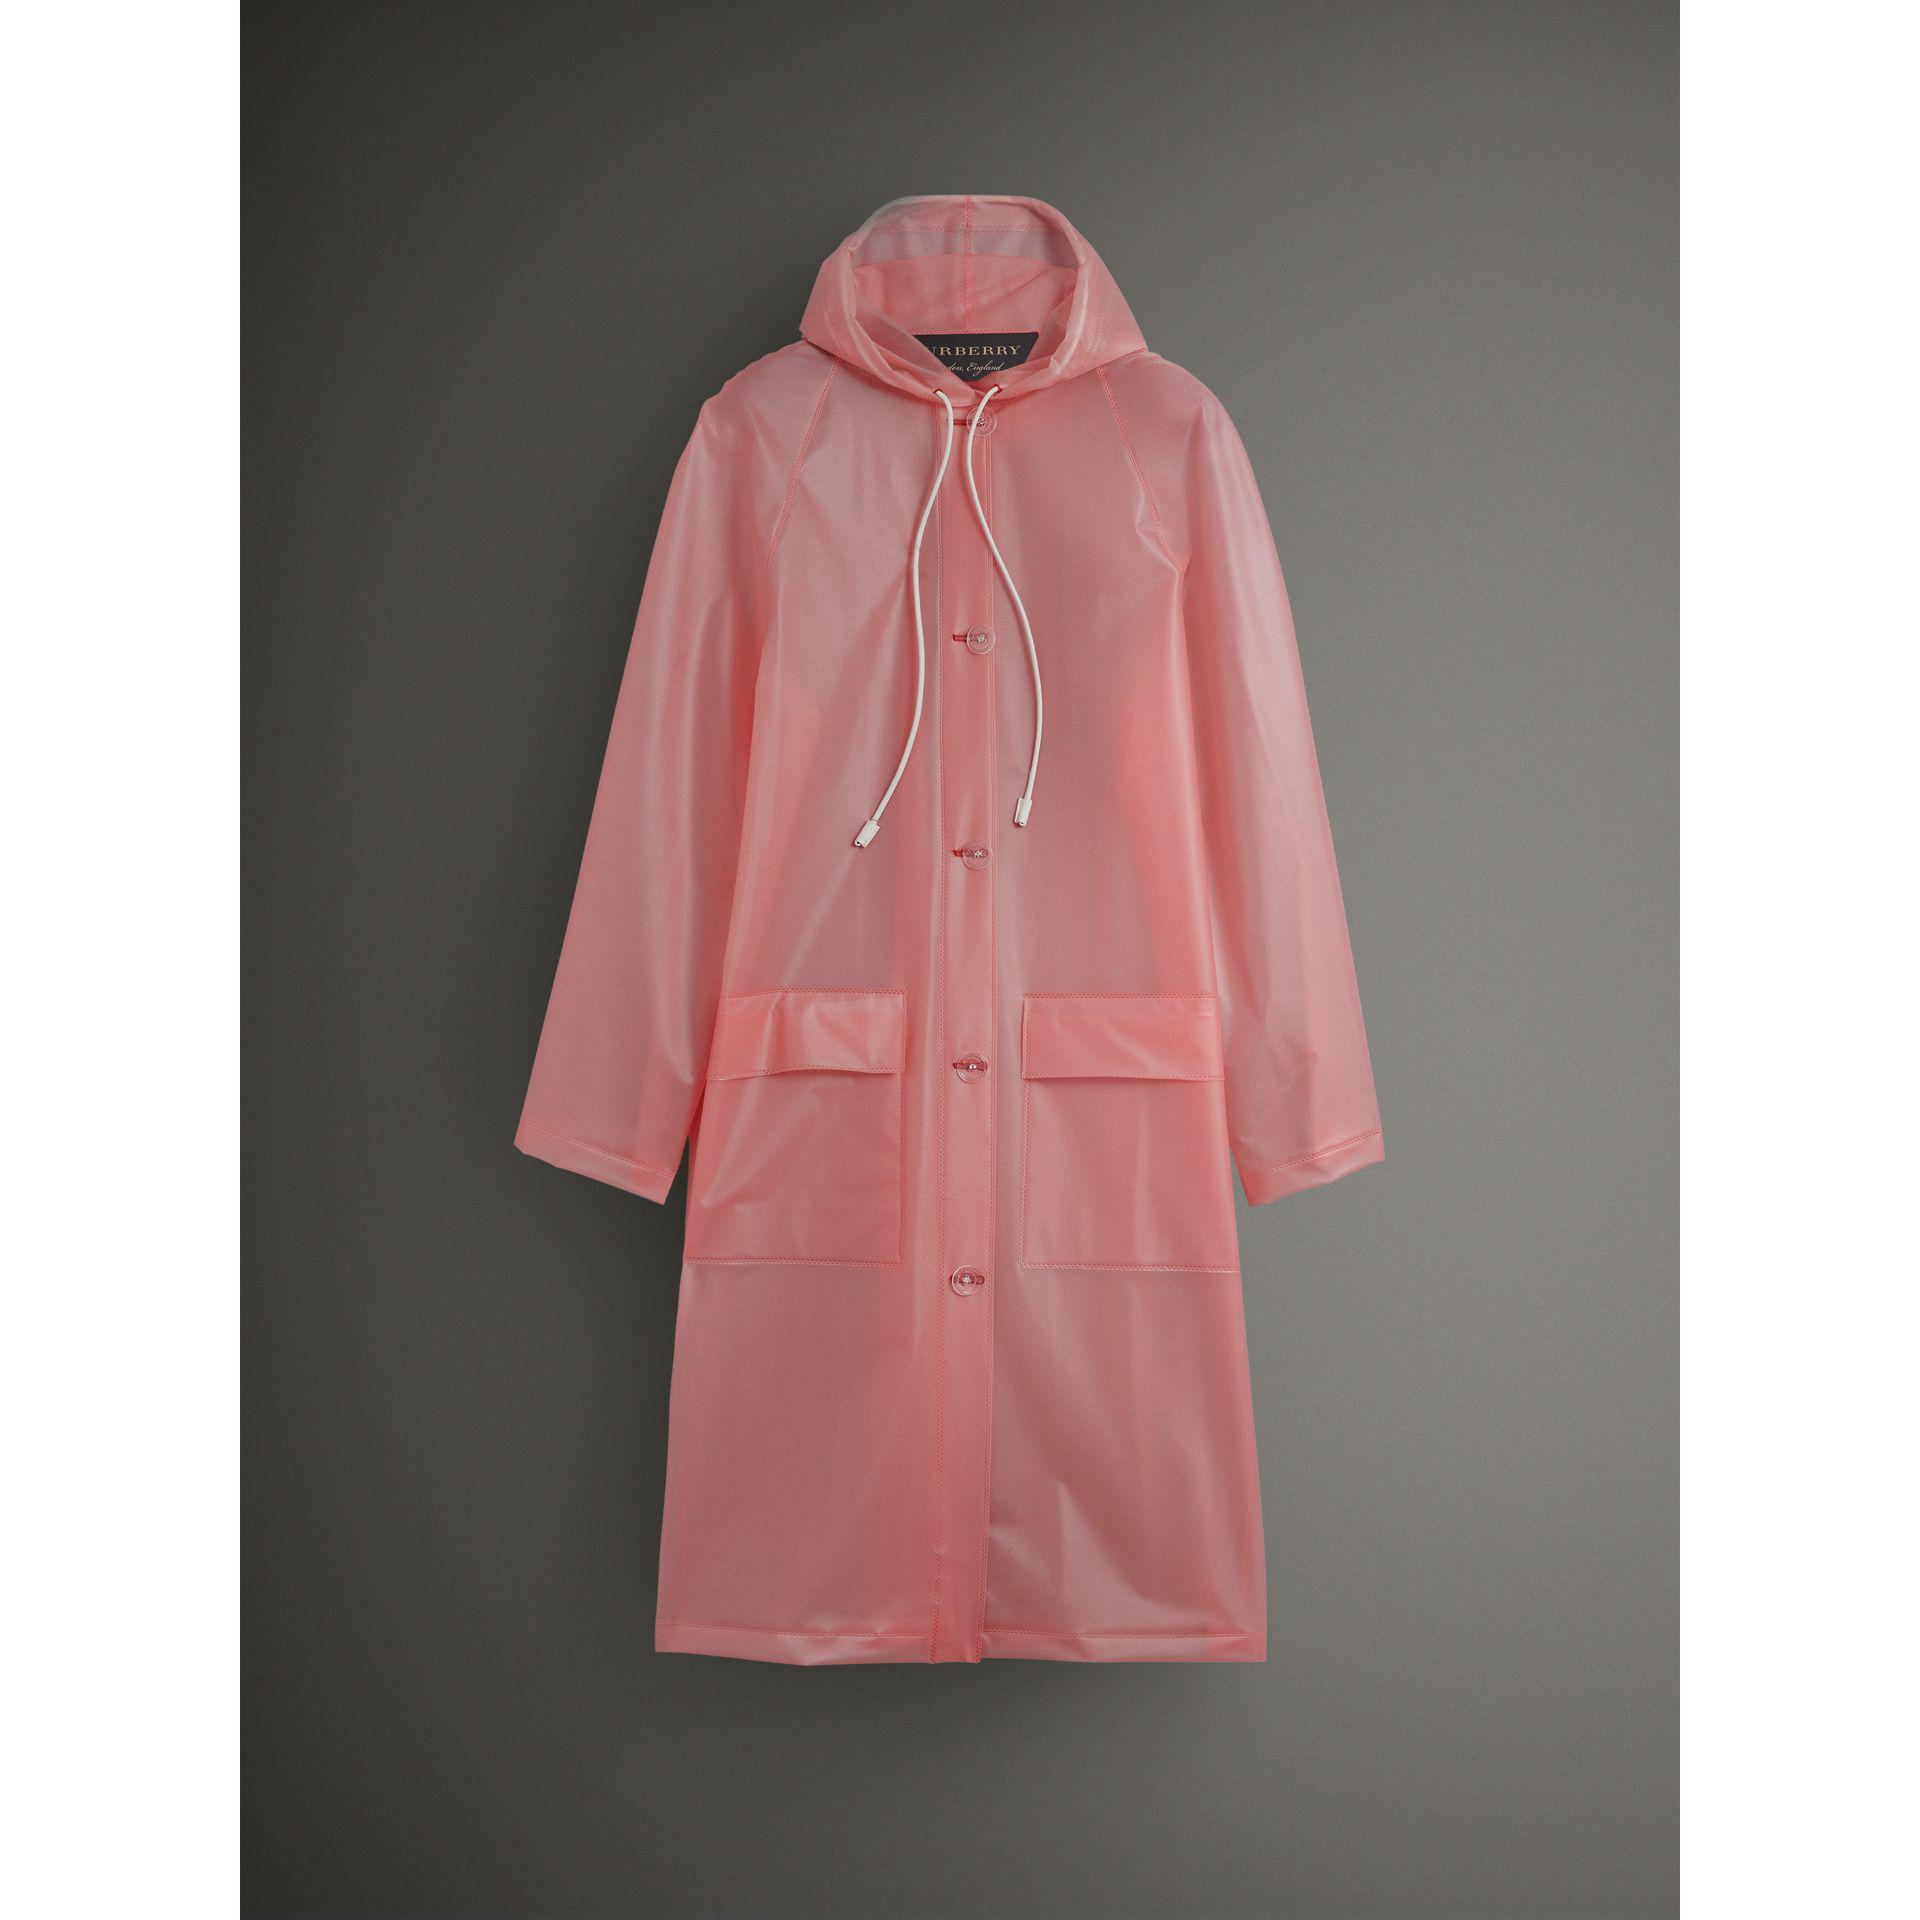 burberry plastic raincoat